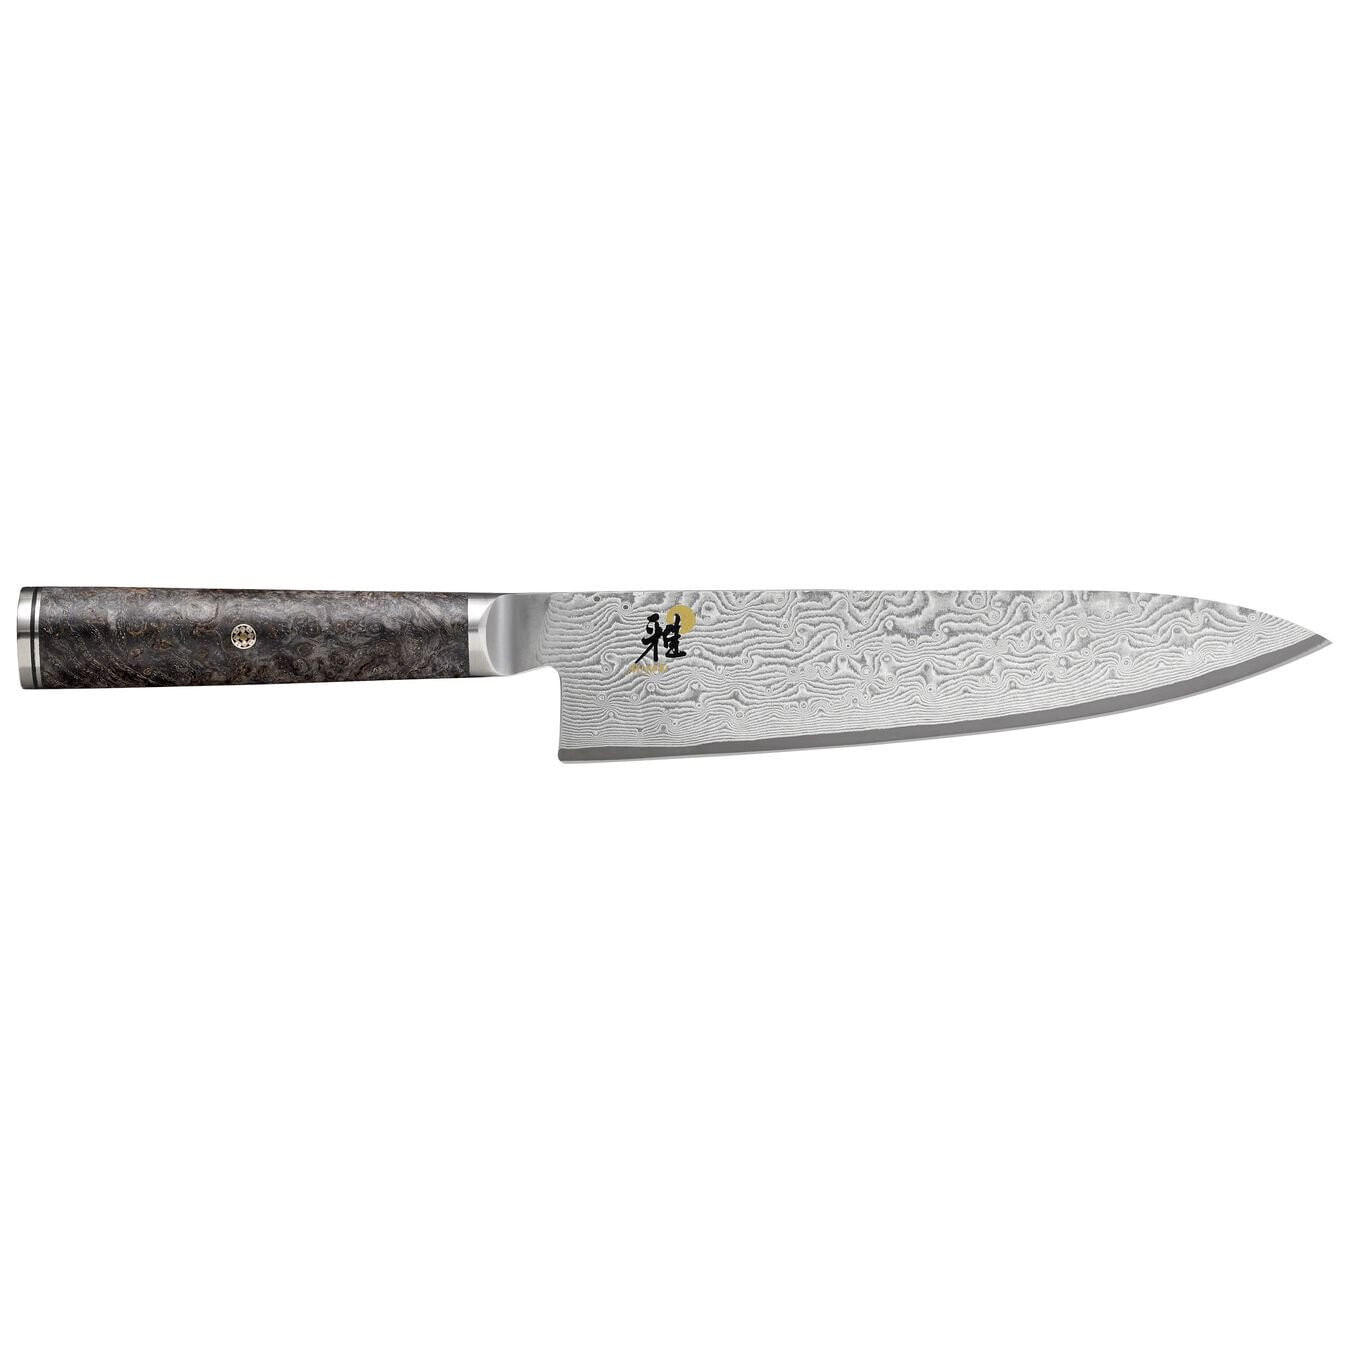 Zwilling Miyabi 5000 MCD 67 - Gyutoh knife - 18 cm - Steel - 1 pc(s)